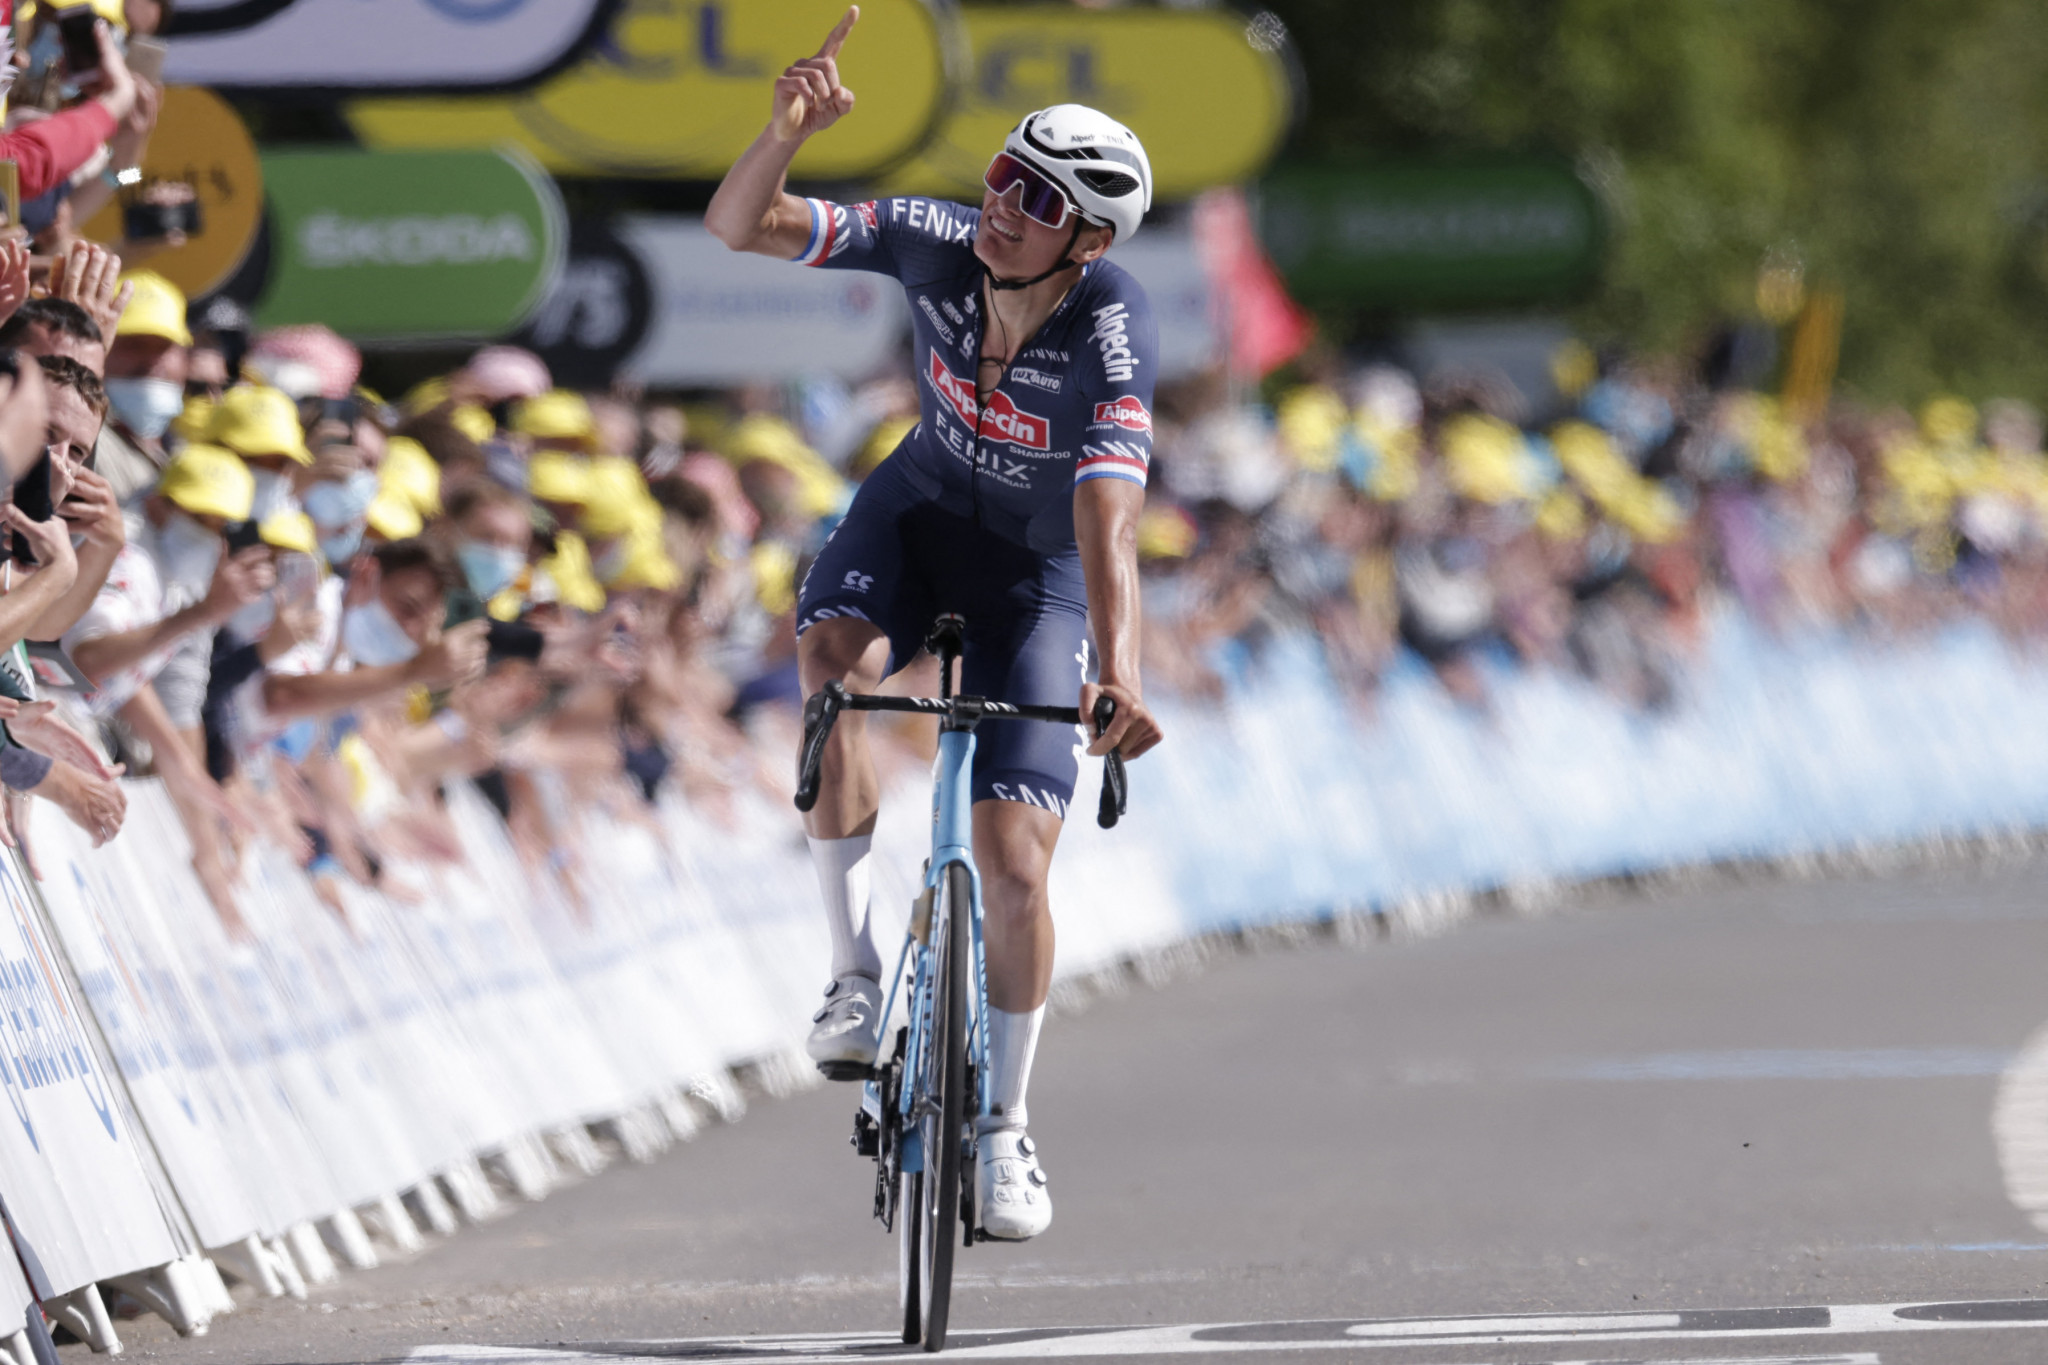 Mathieu van der Poel won a stage at the Tour de France in 2021 ©Getty Images